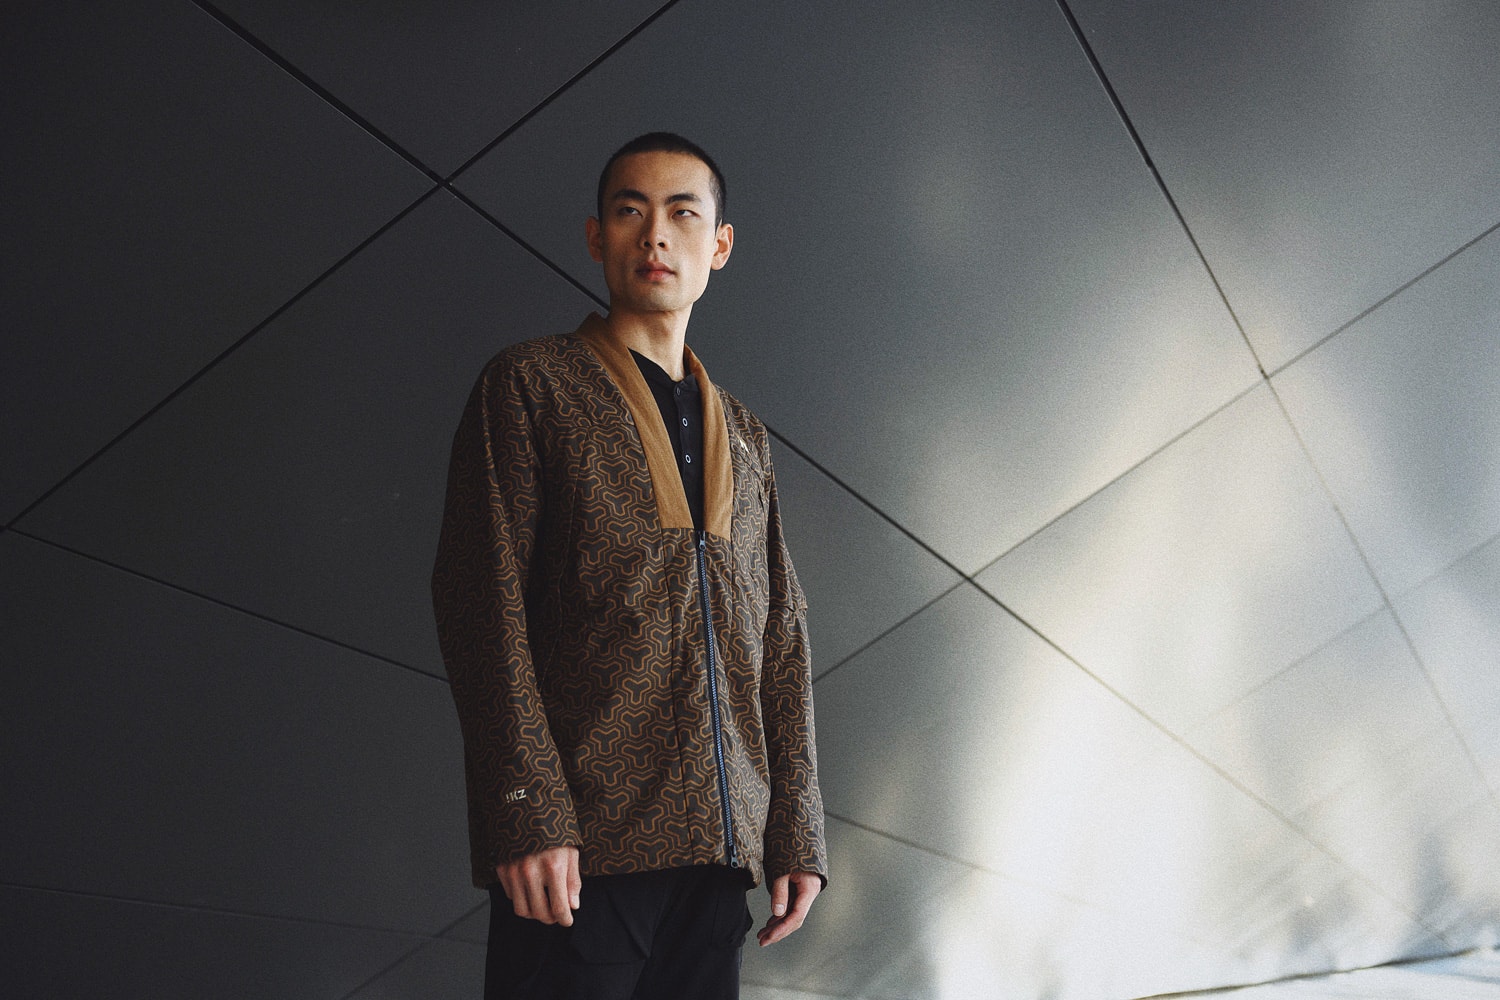 IKUZO combines the Physical and Digital Streetwear Lookbook 